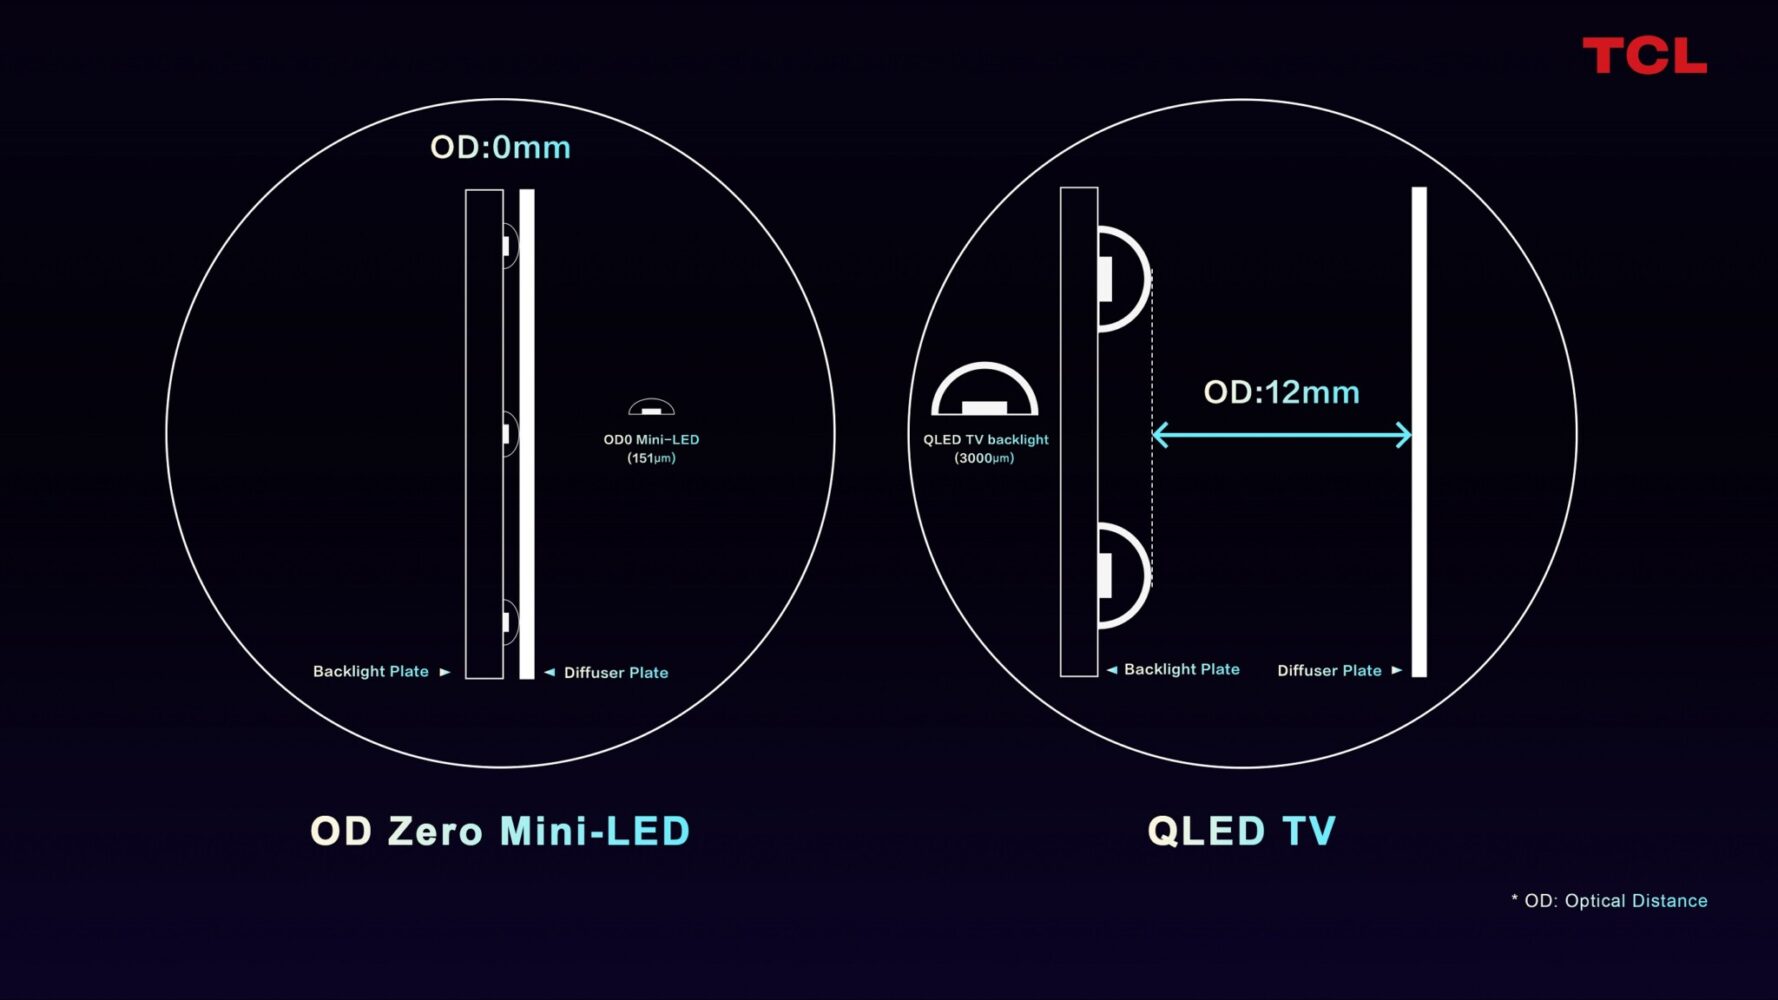 Mini-LED OD Zero